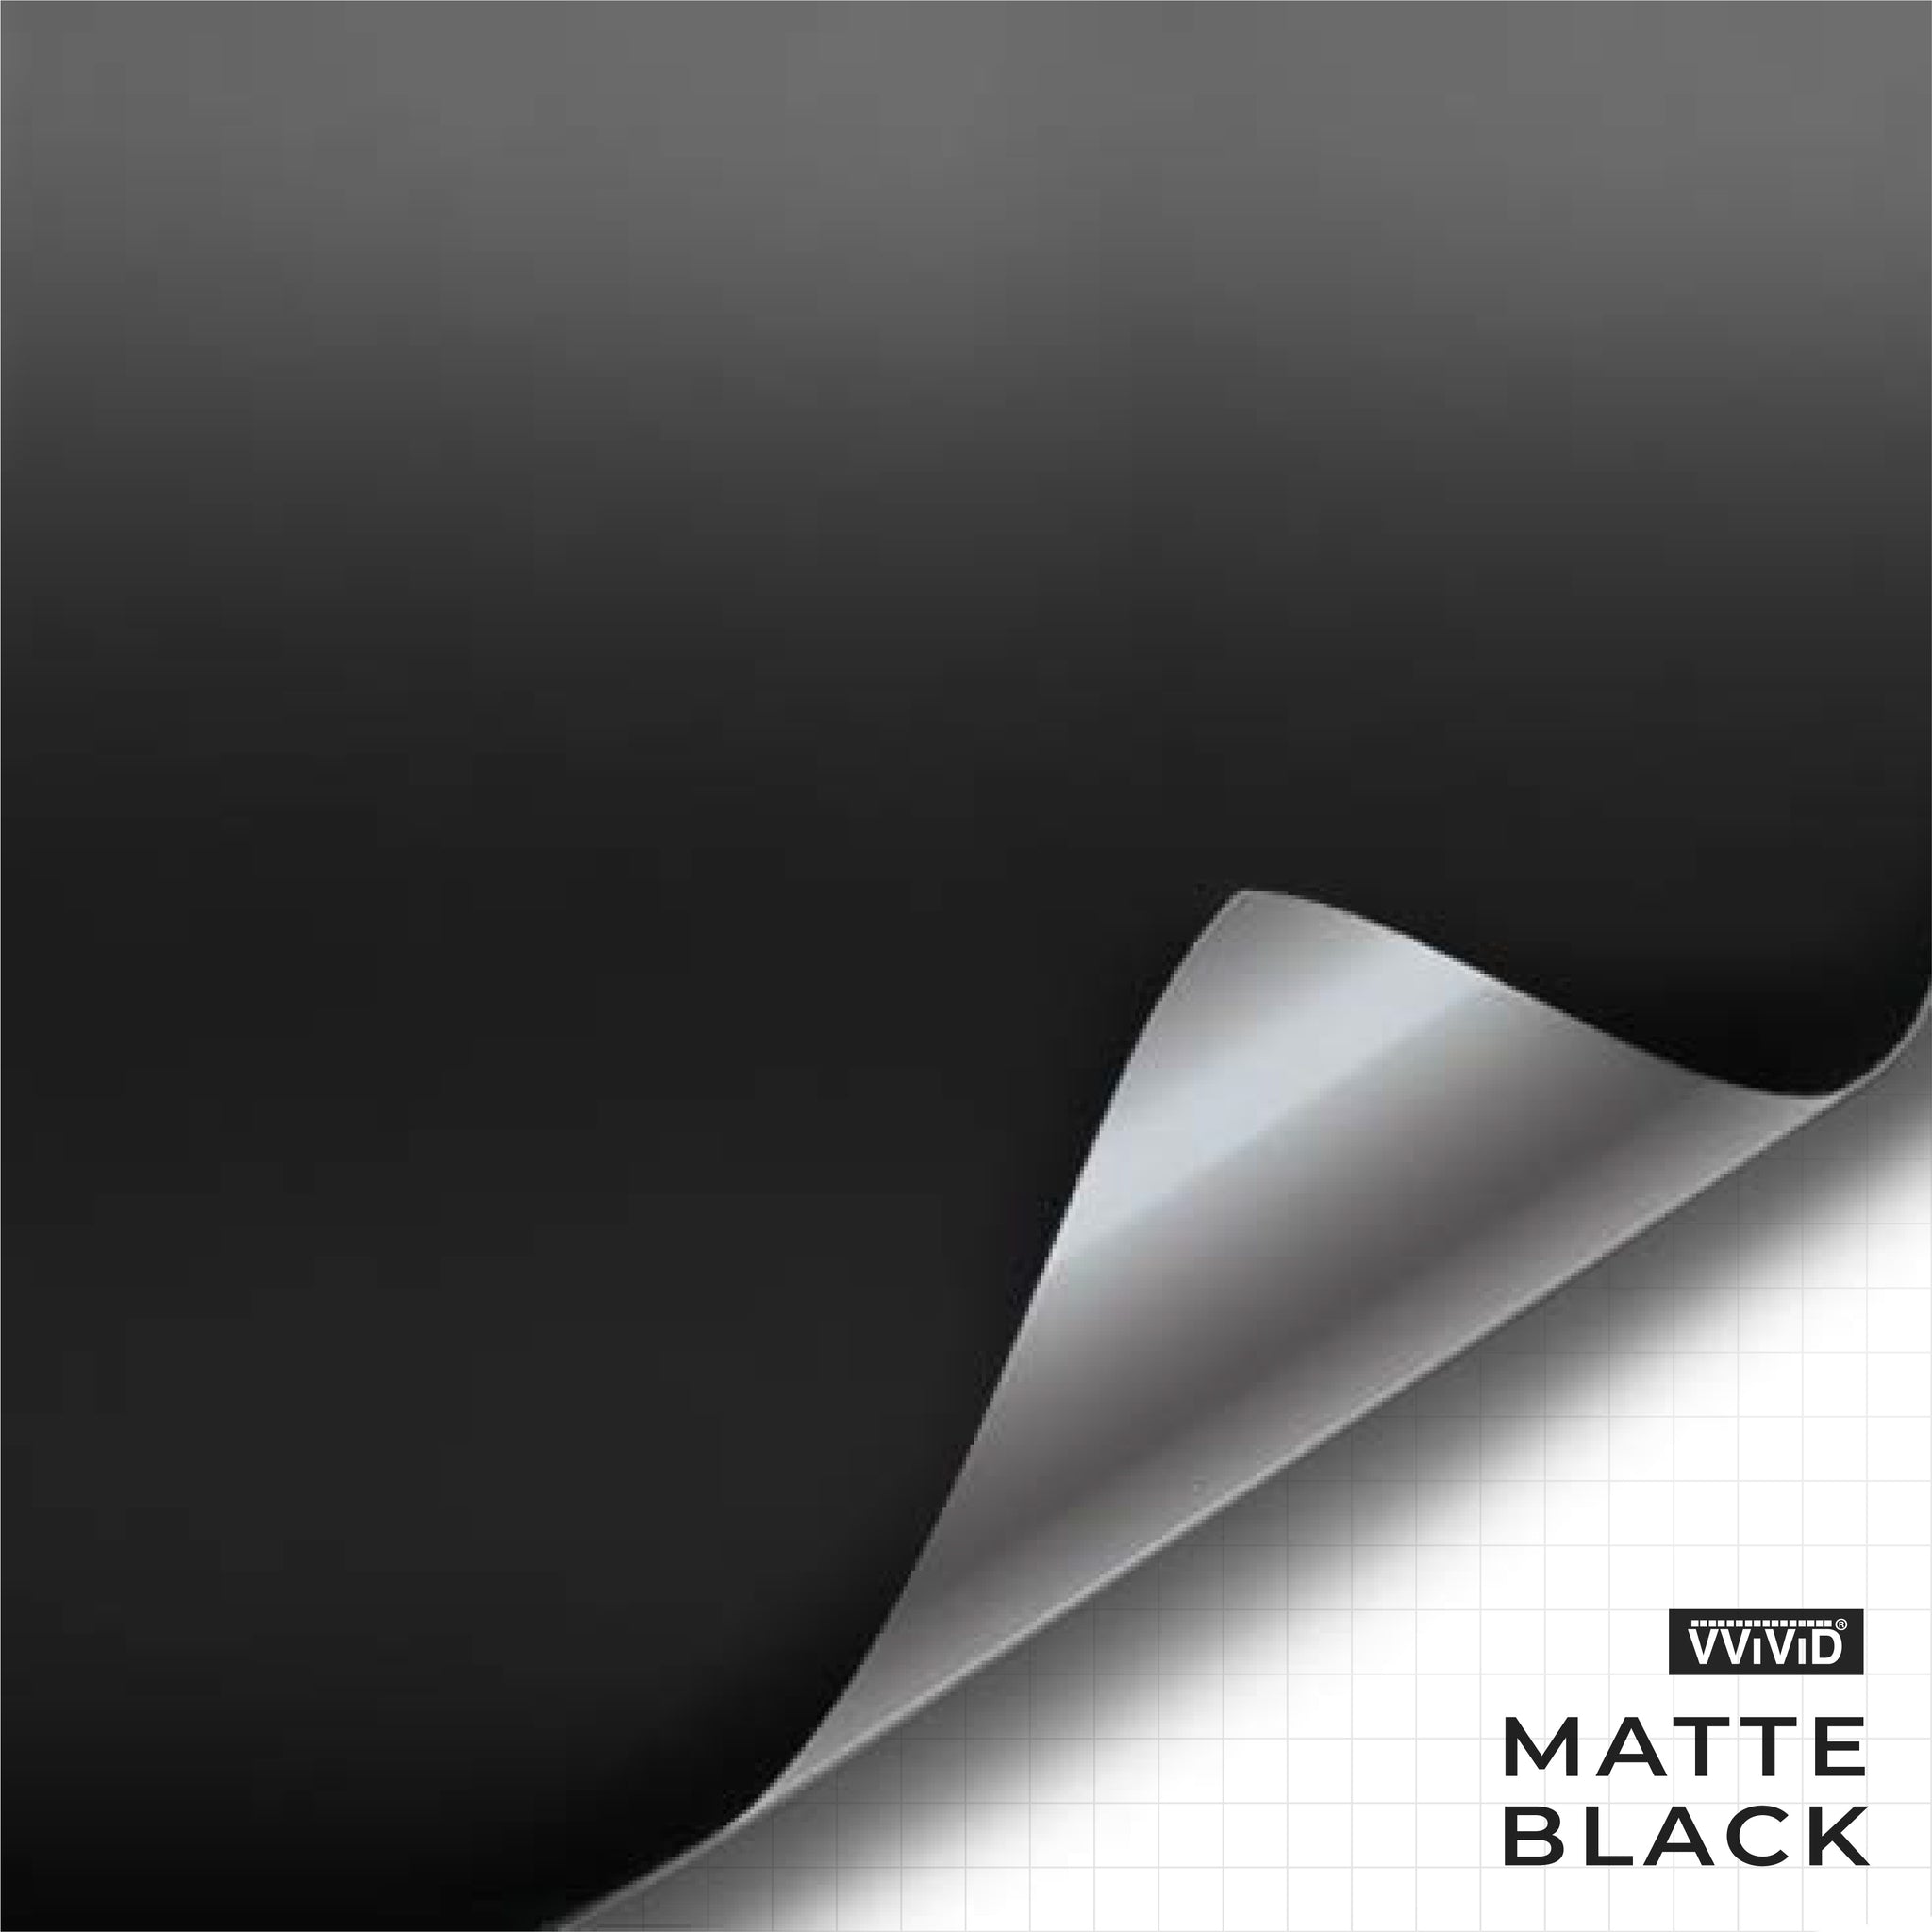 VViViD Black Matte Air-Release Adhesive Vinyl Tape Roll (3 Inch x 20ft)